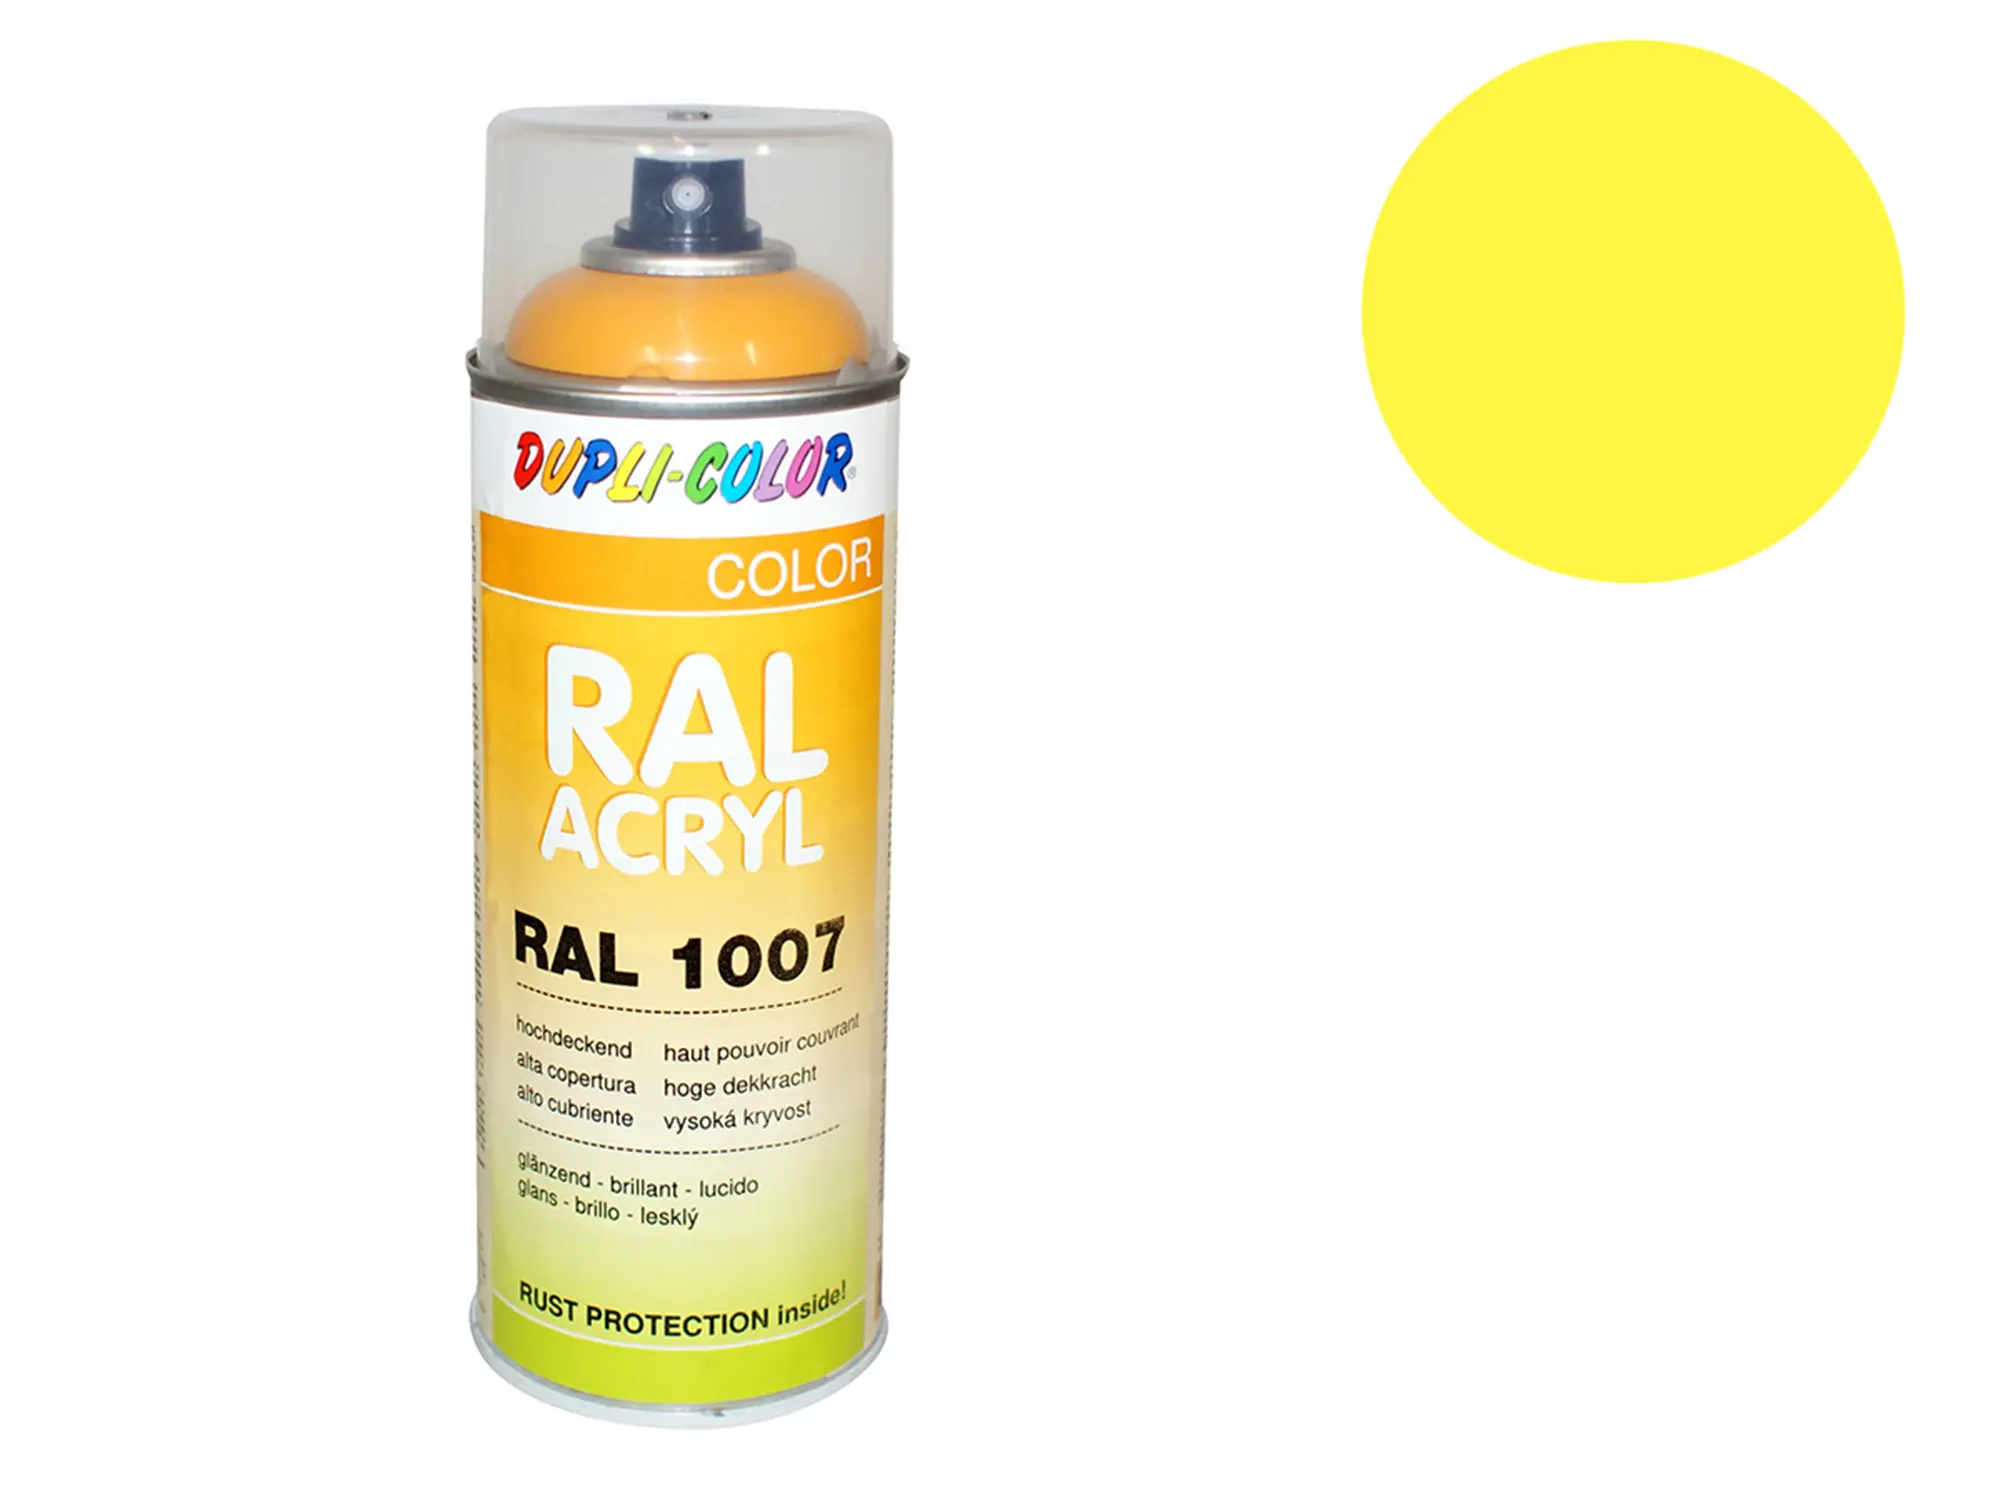 Dupli-Color Acryl-Spray RAL 1016 schwefelgelb, glänzend - 400 ml, Art.-Nr.: 10064745 - Bild 1